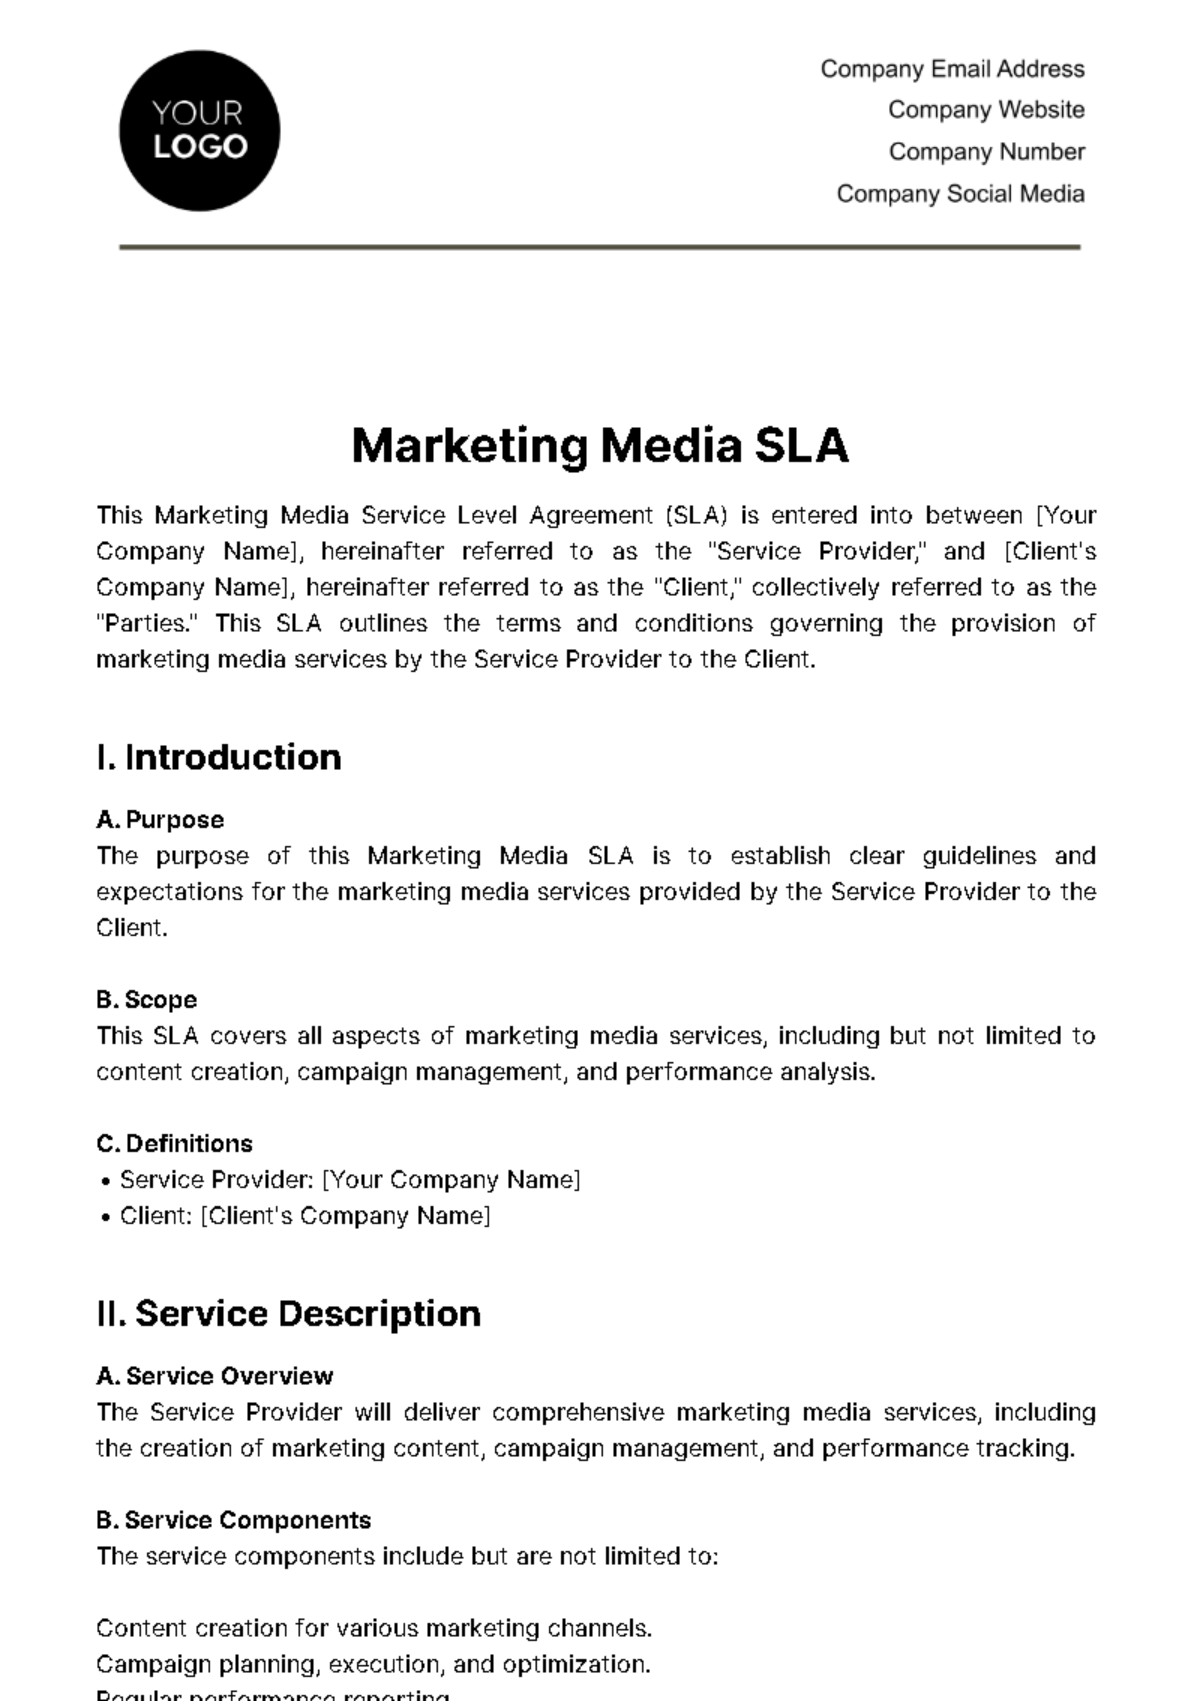 Marketing Media SLA Template